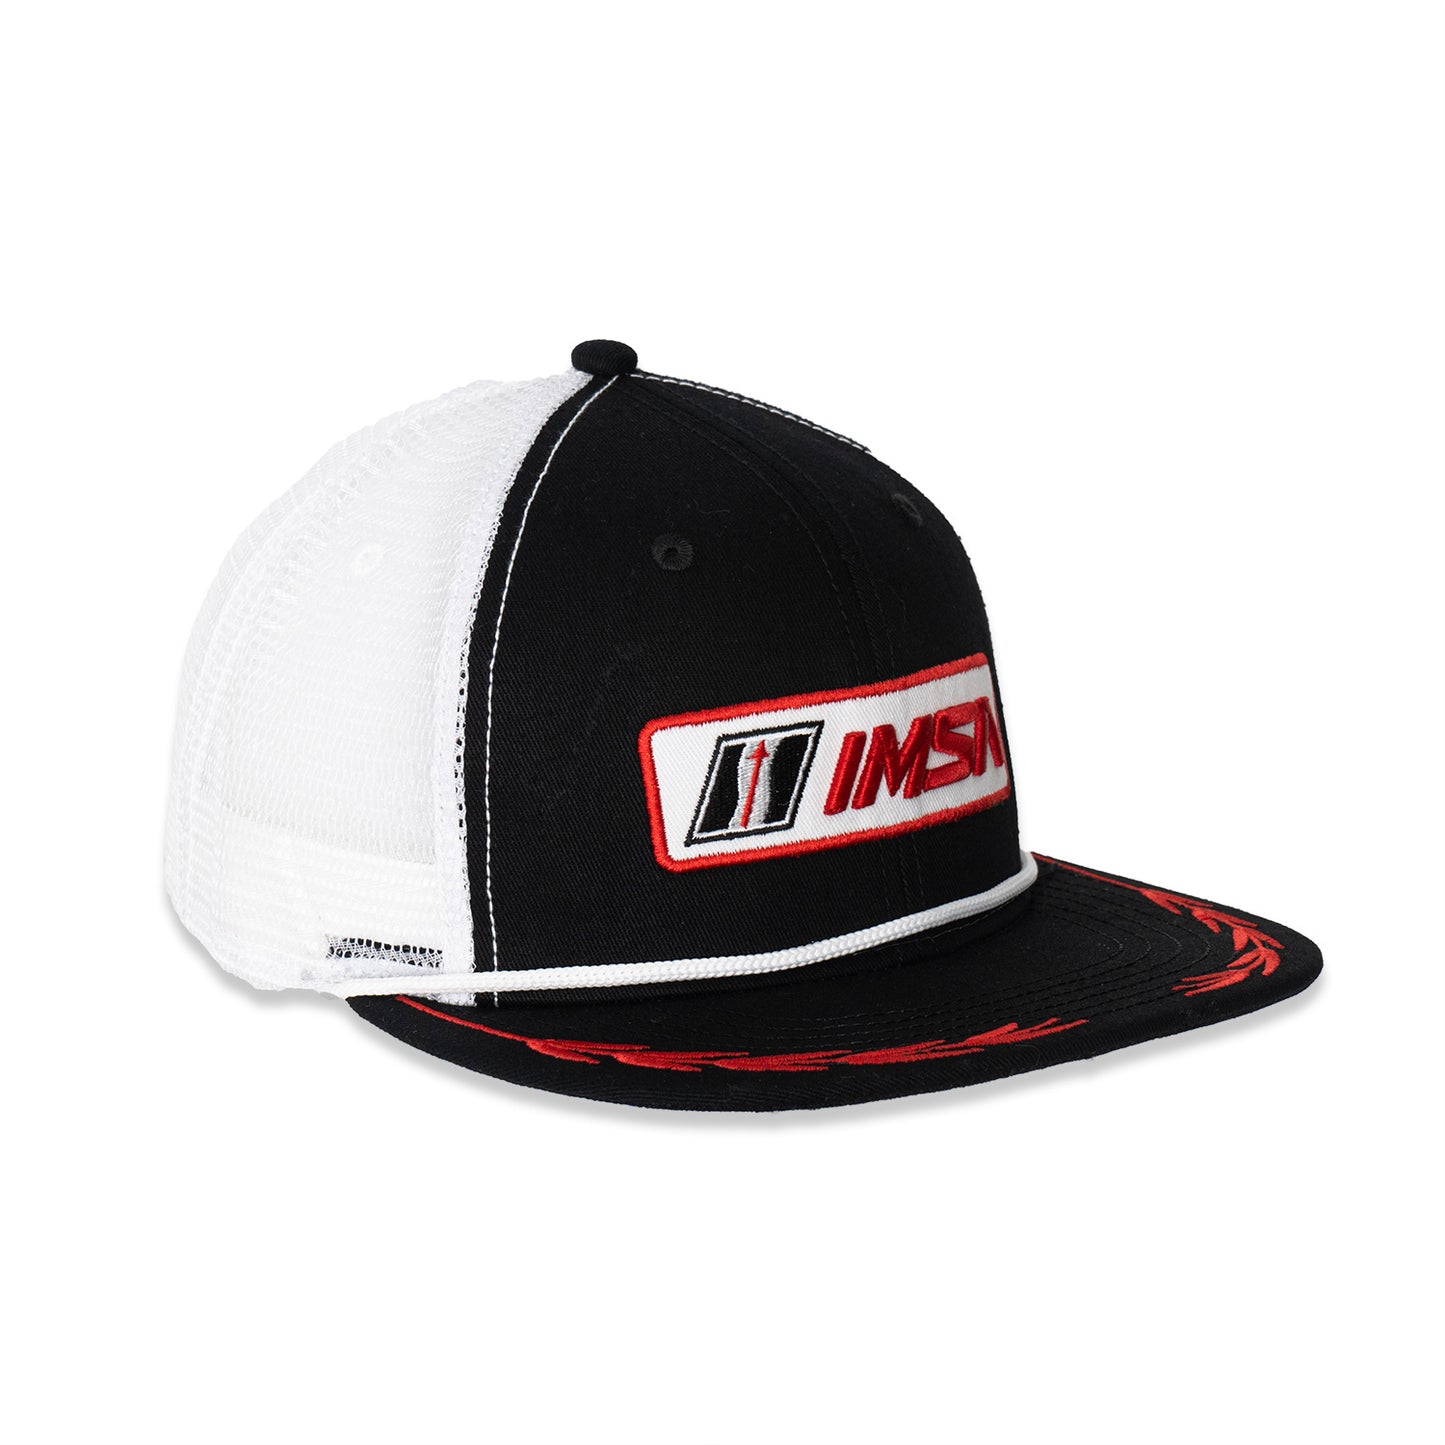 IMSA Flatbill Snapback Hat - Black / White